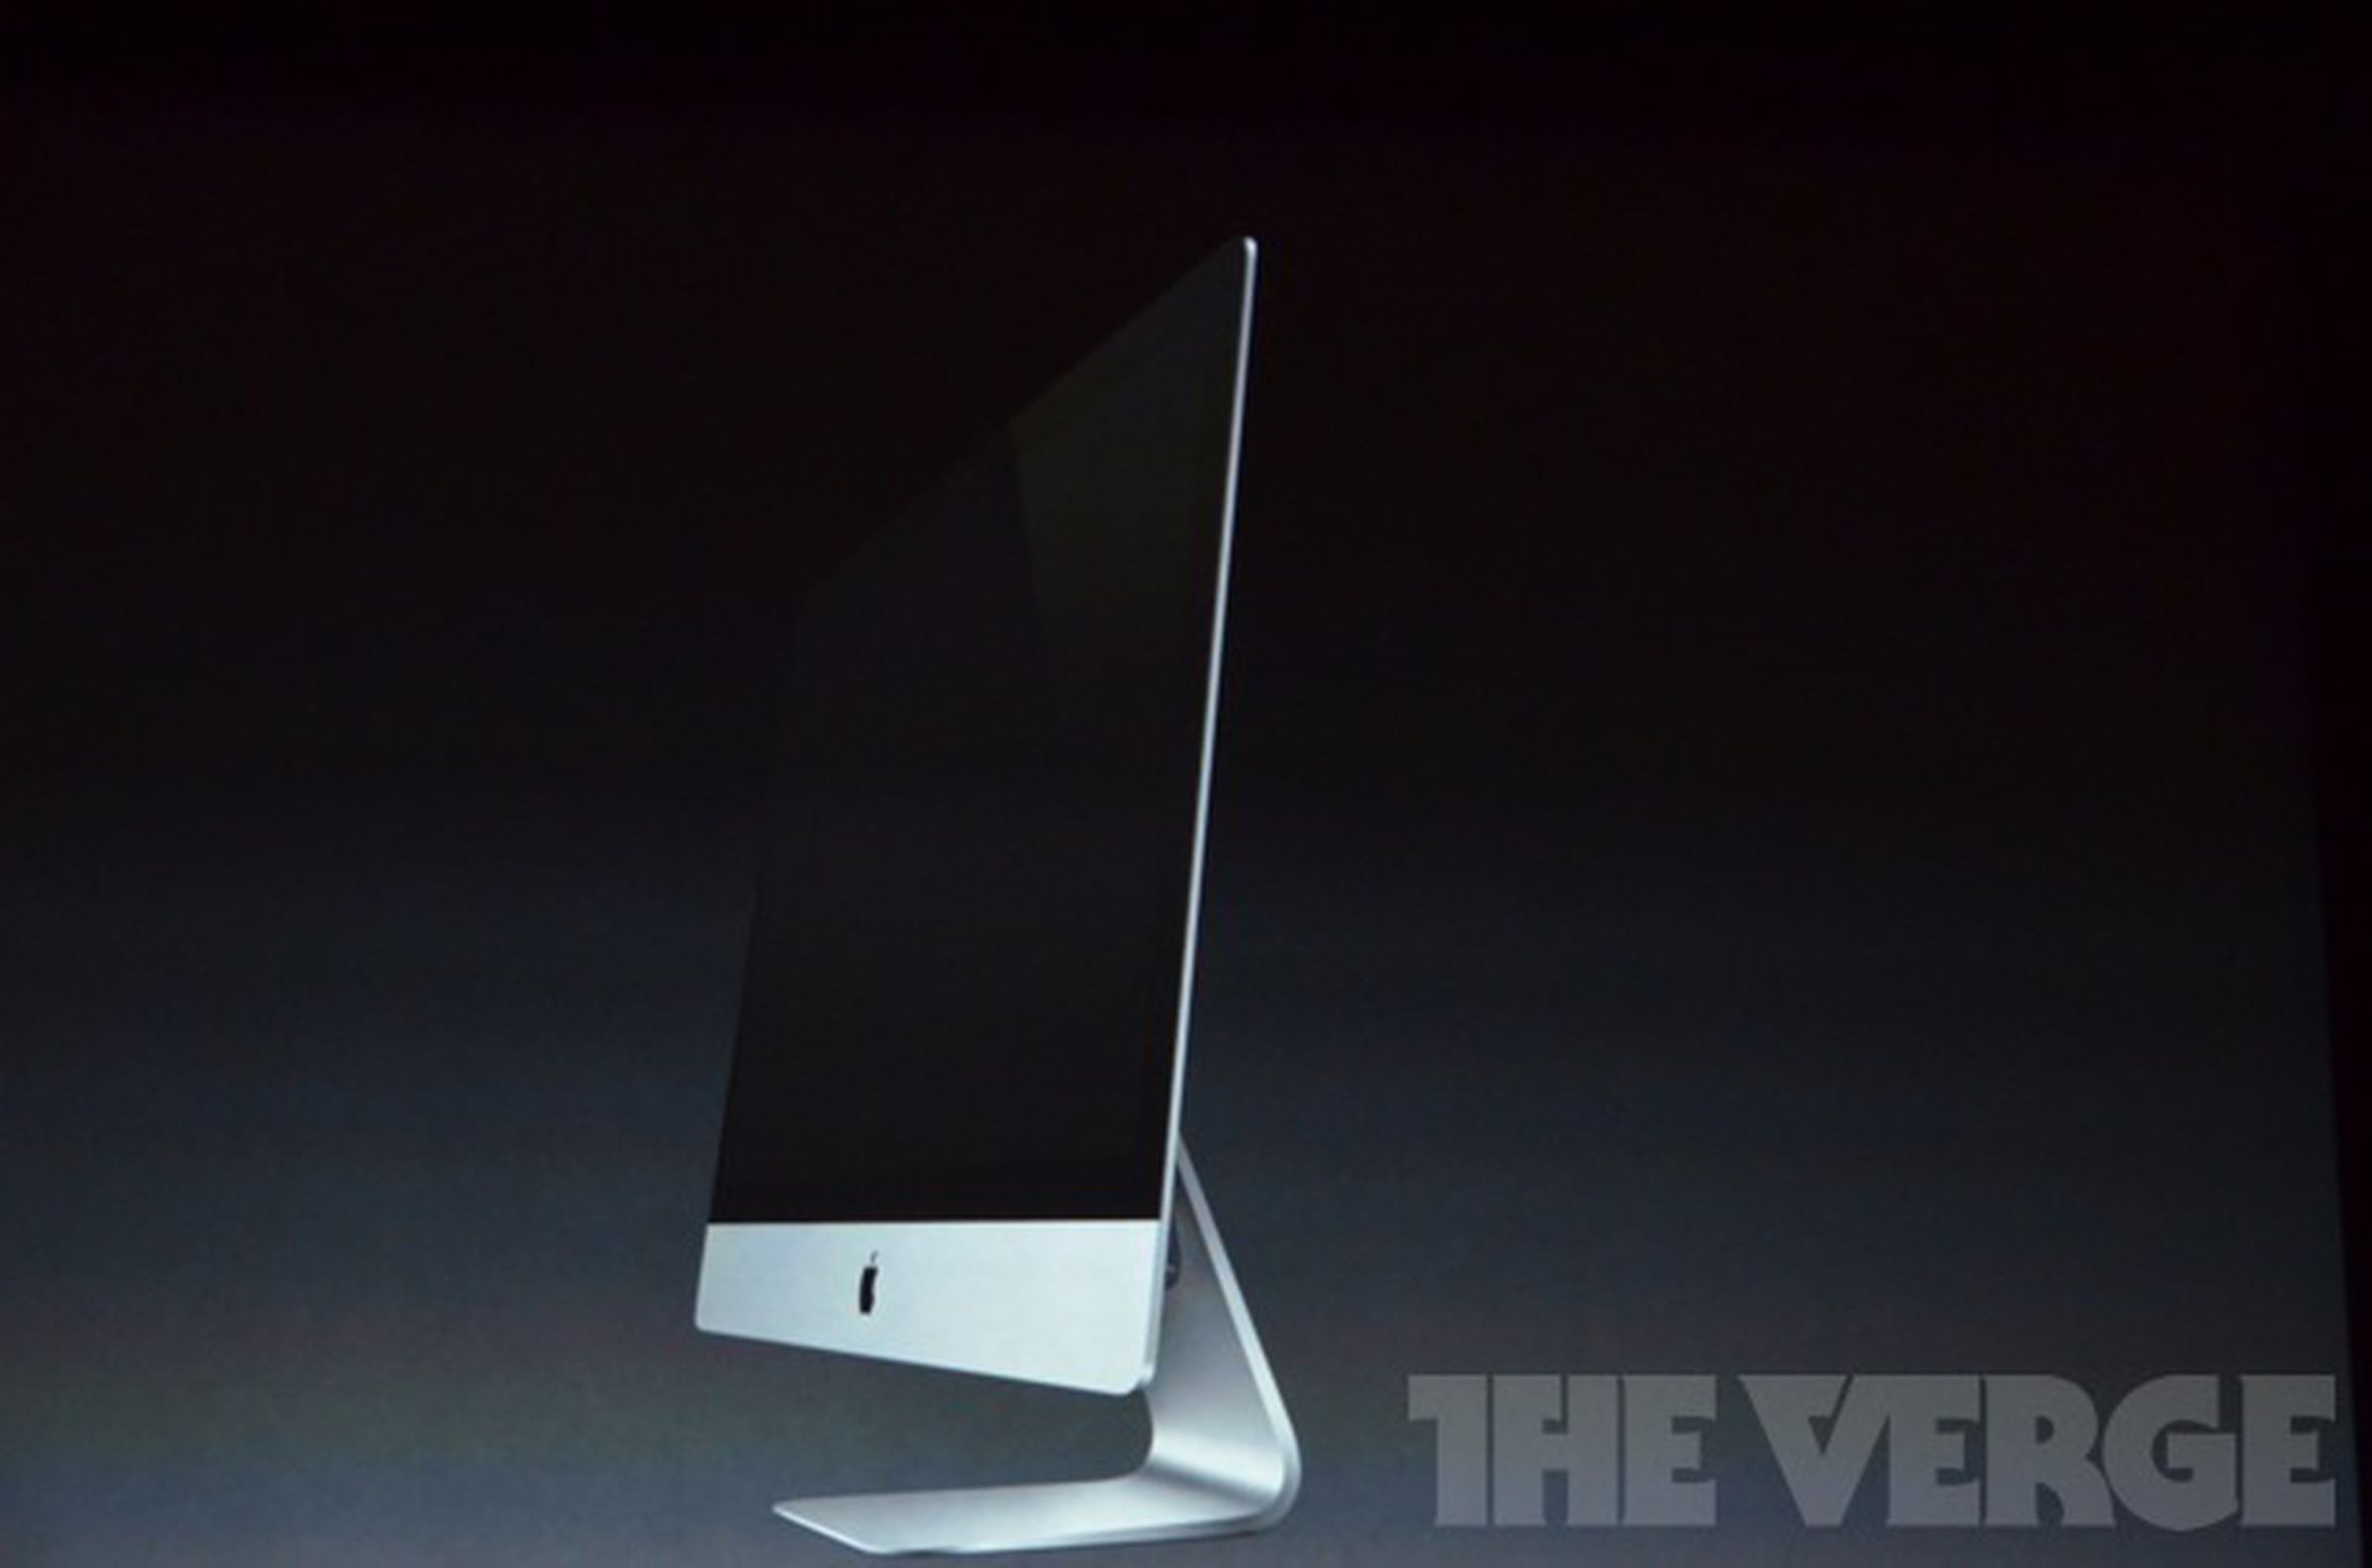 Apple's new iMac liveblog photos